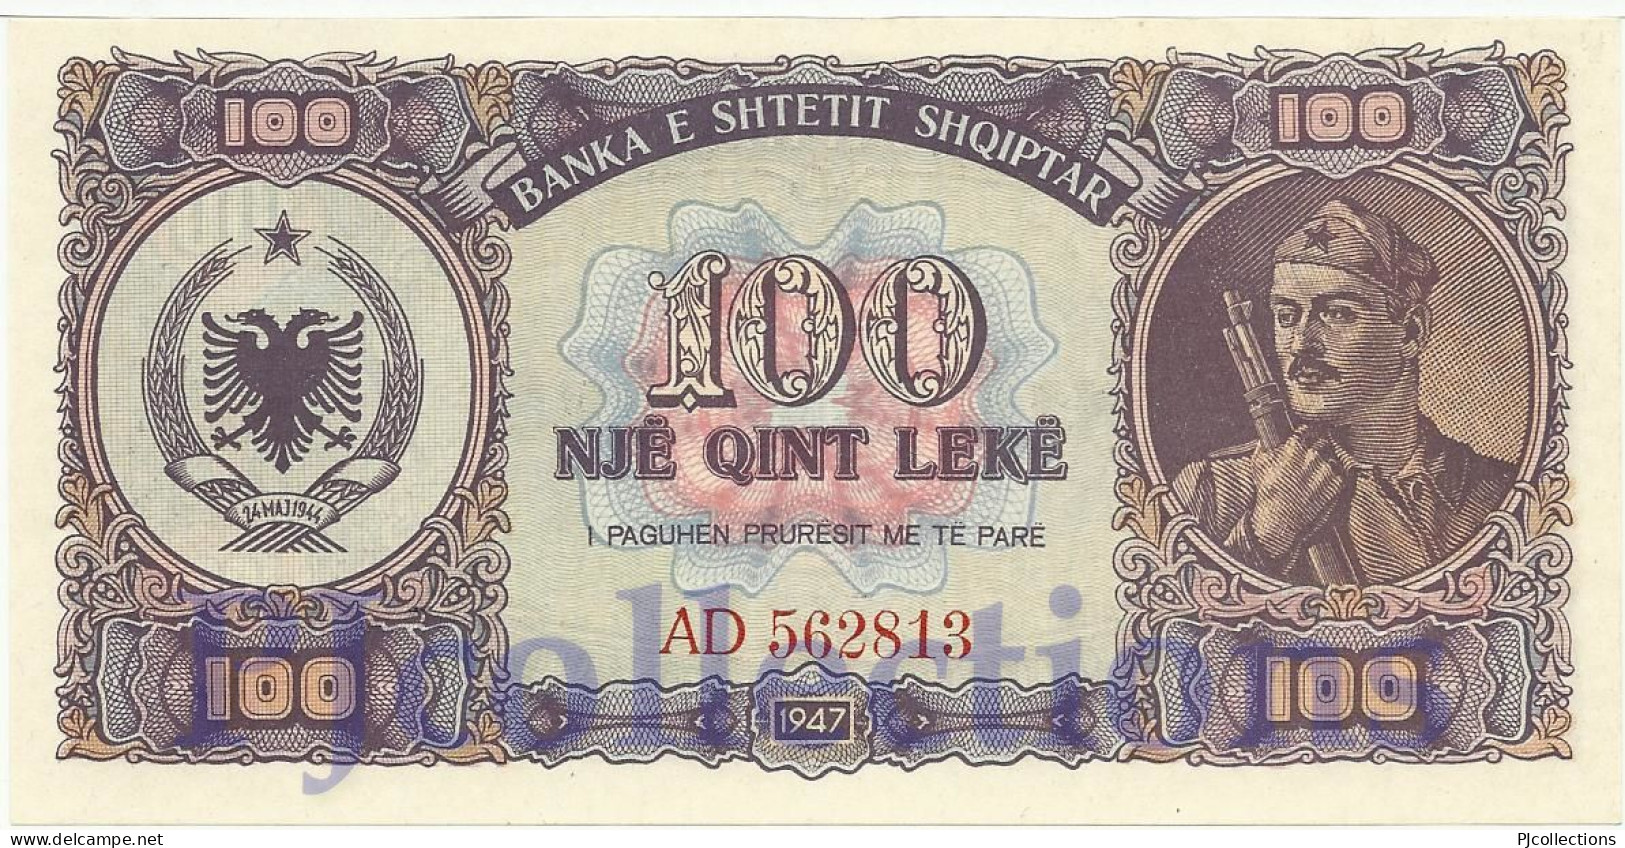 ALBANIA 100 LEKE 1947 PICK 21 UNC RARE SERIES "AD562813" - Albania